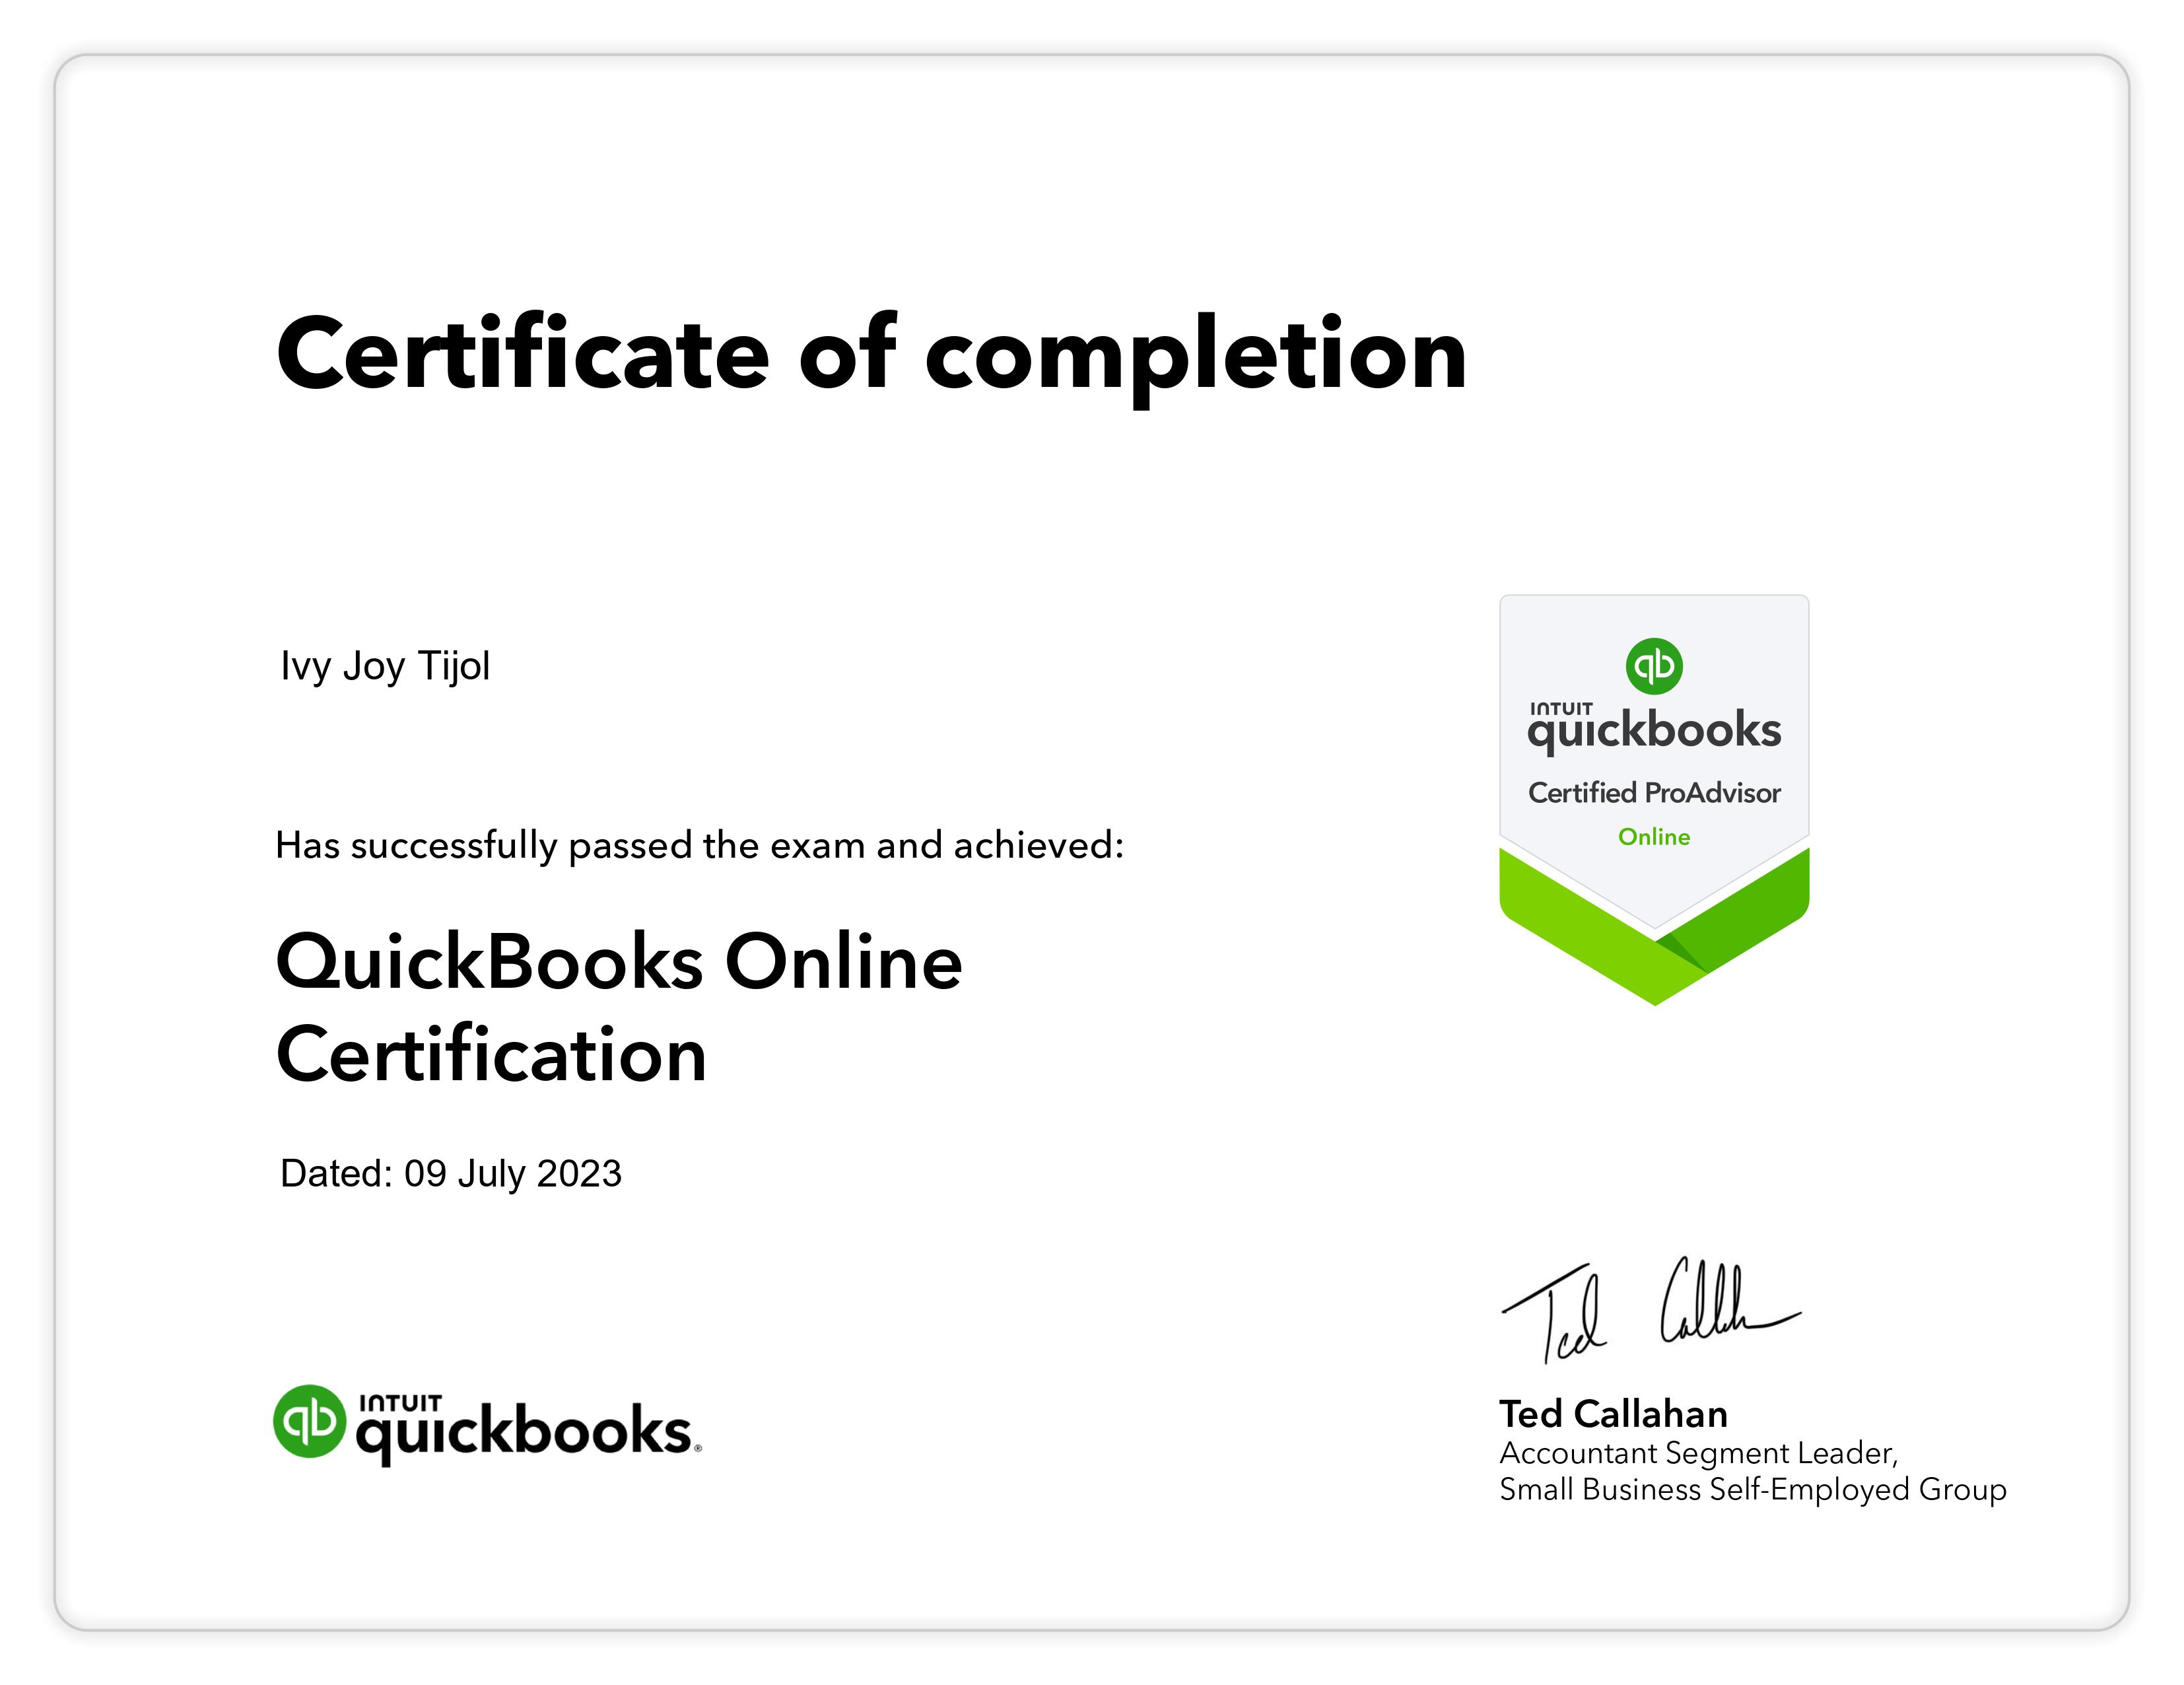 QuickBooks Online Certificate